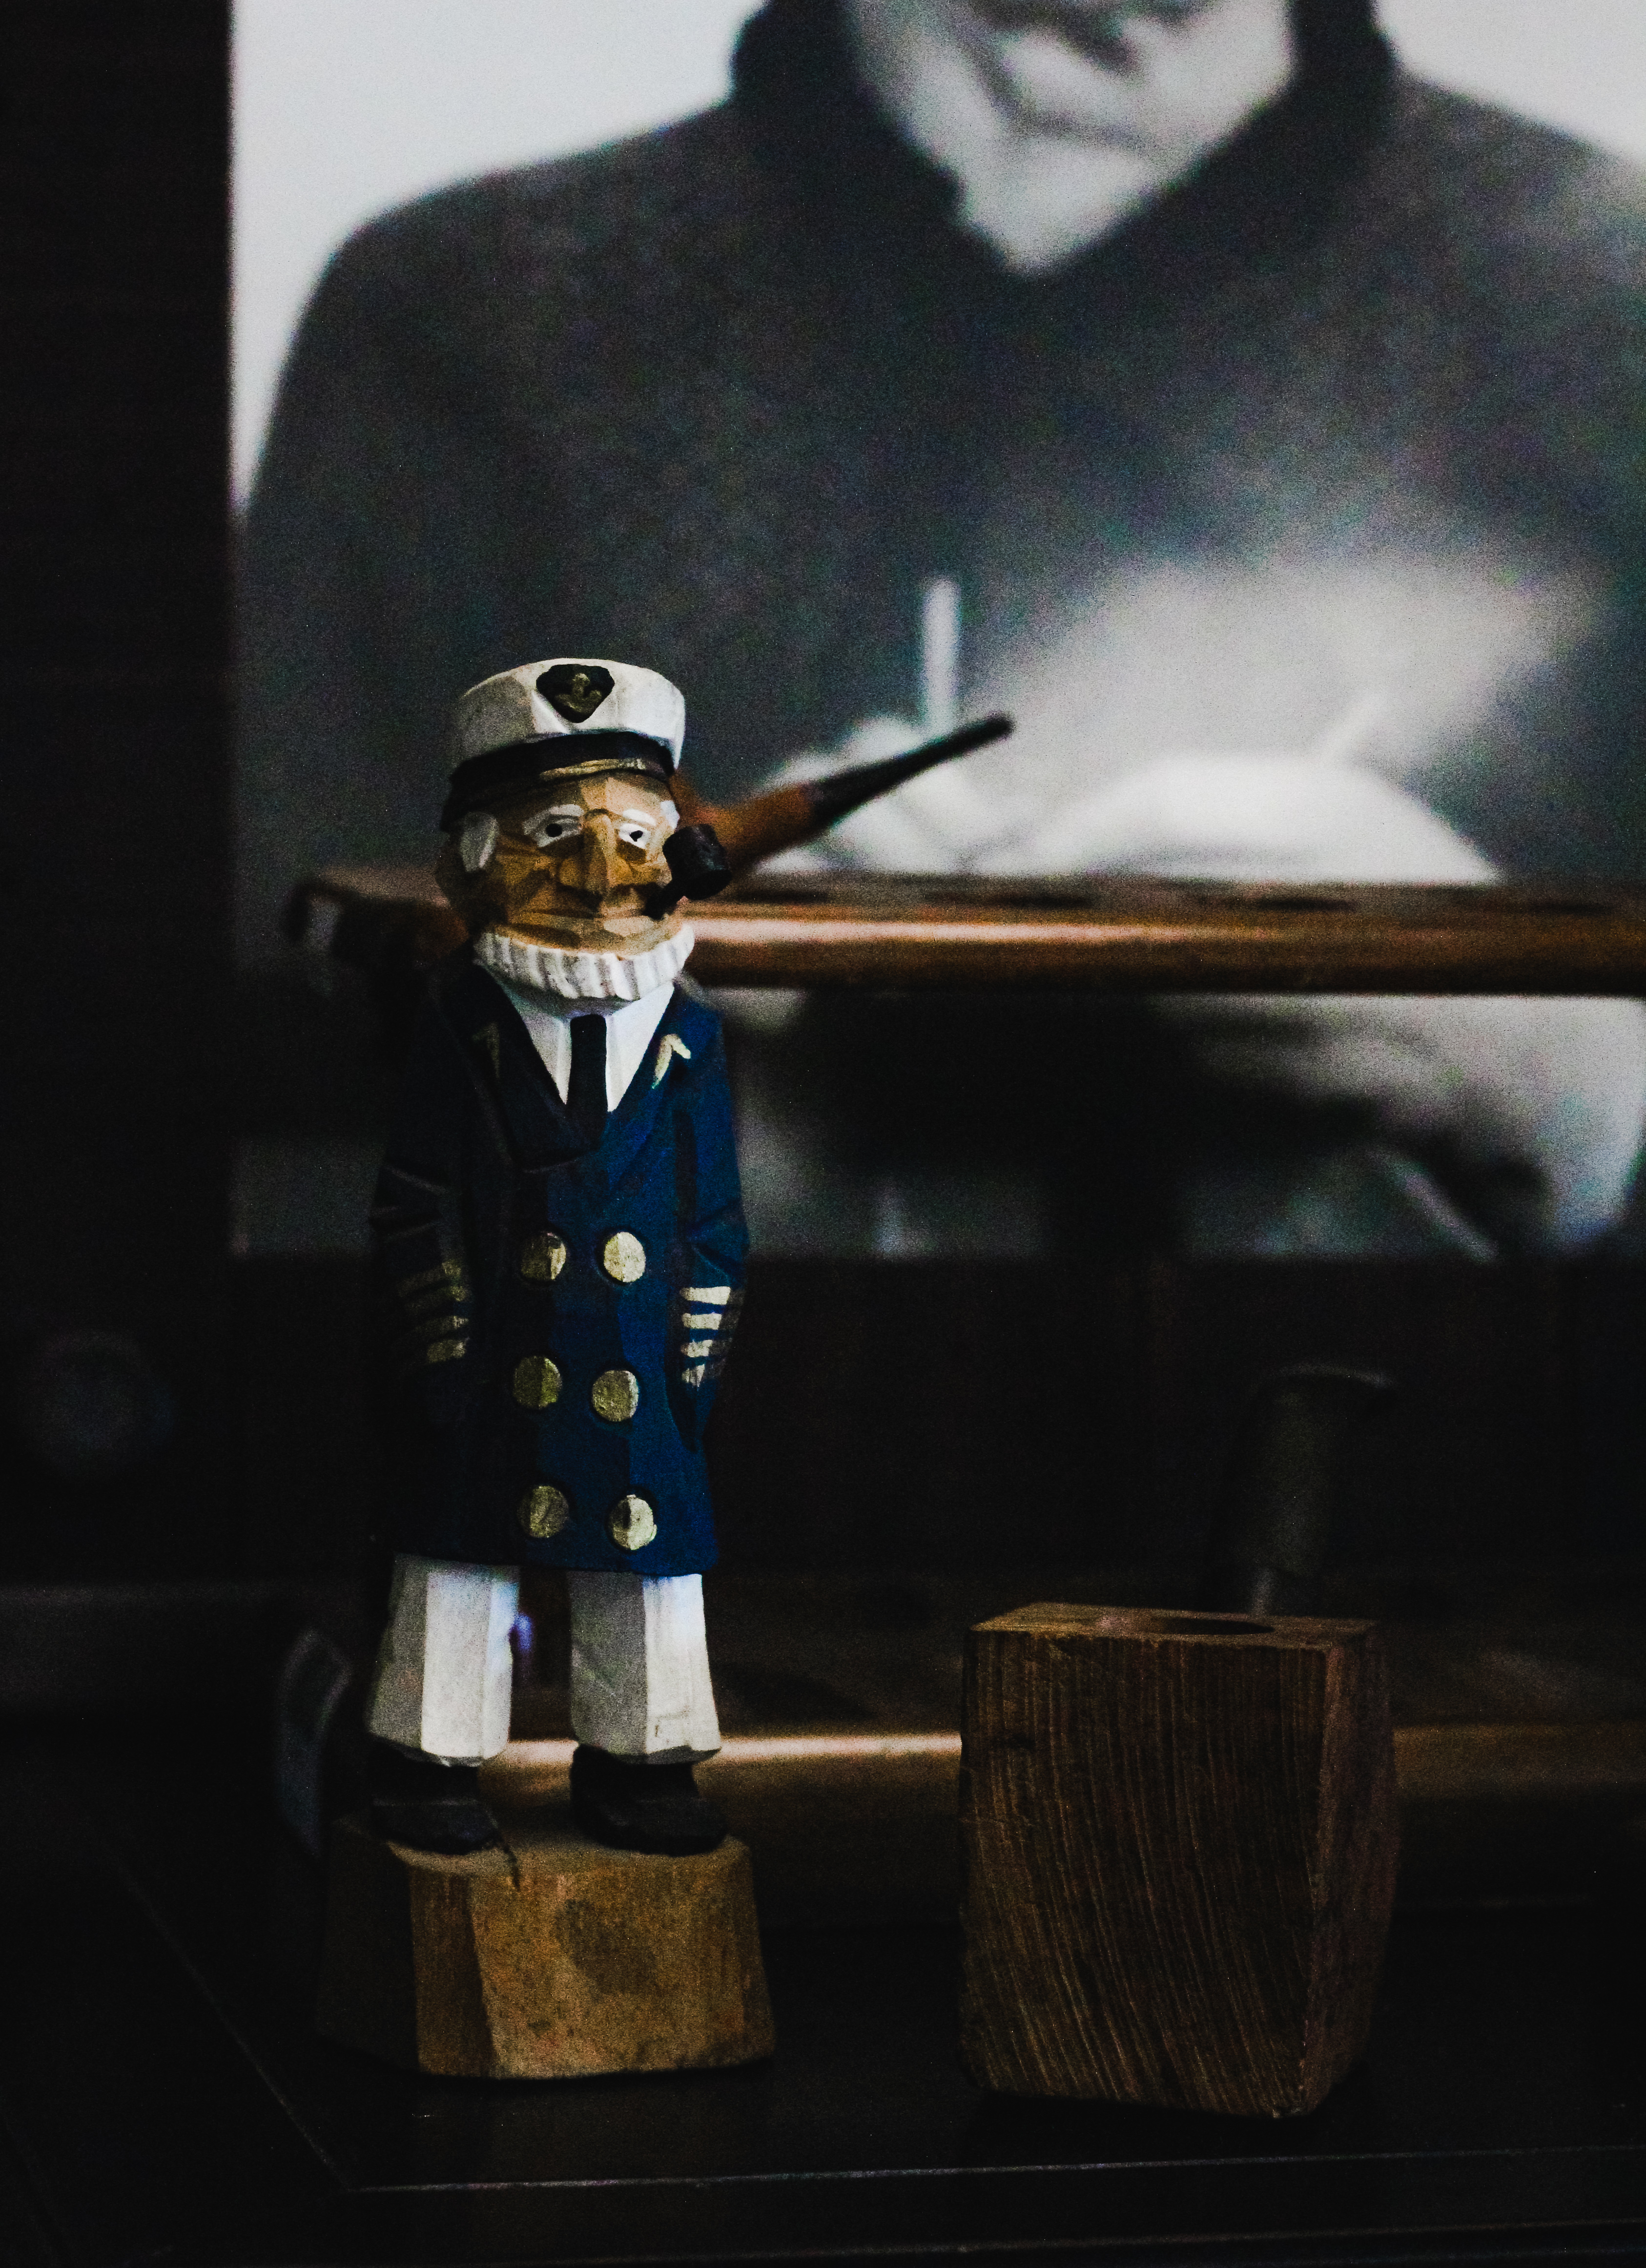 sailor smoking wood figurine, black and white portrait, cigar lounge, moody lighting